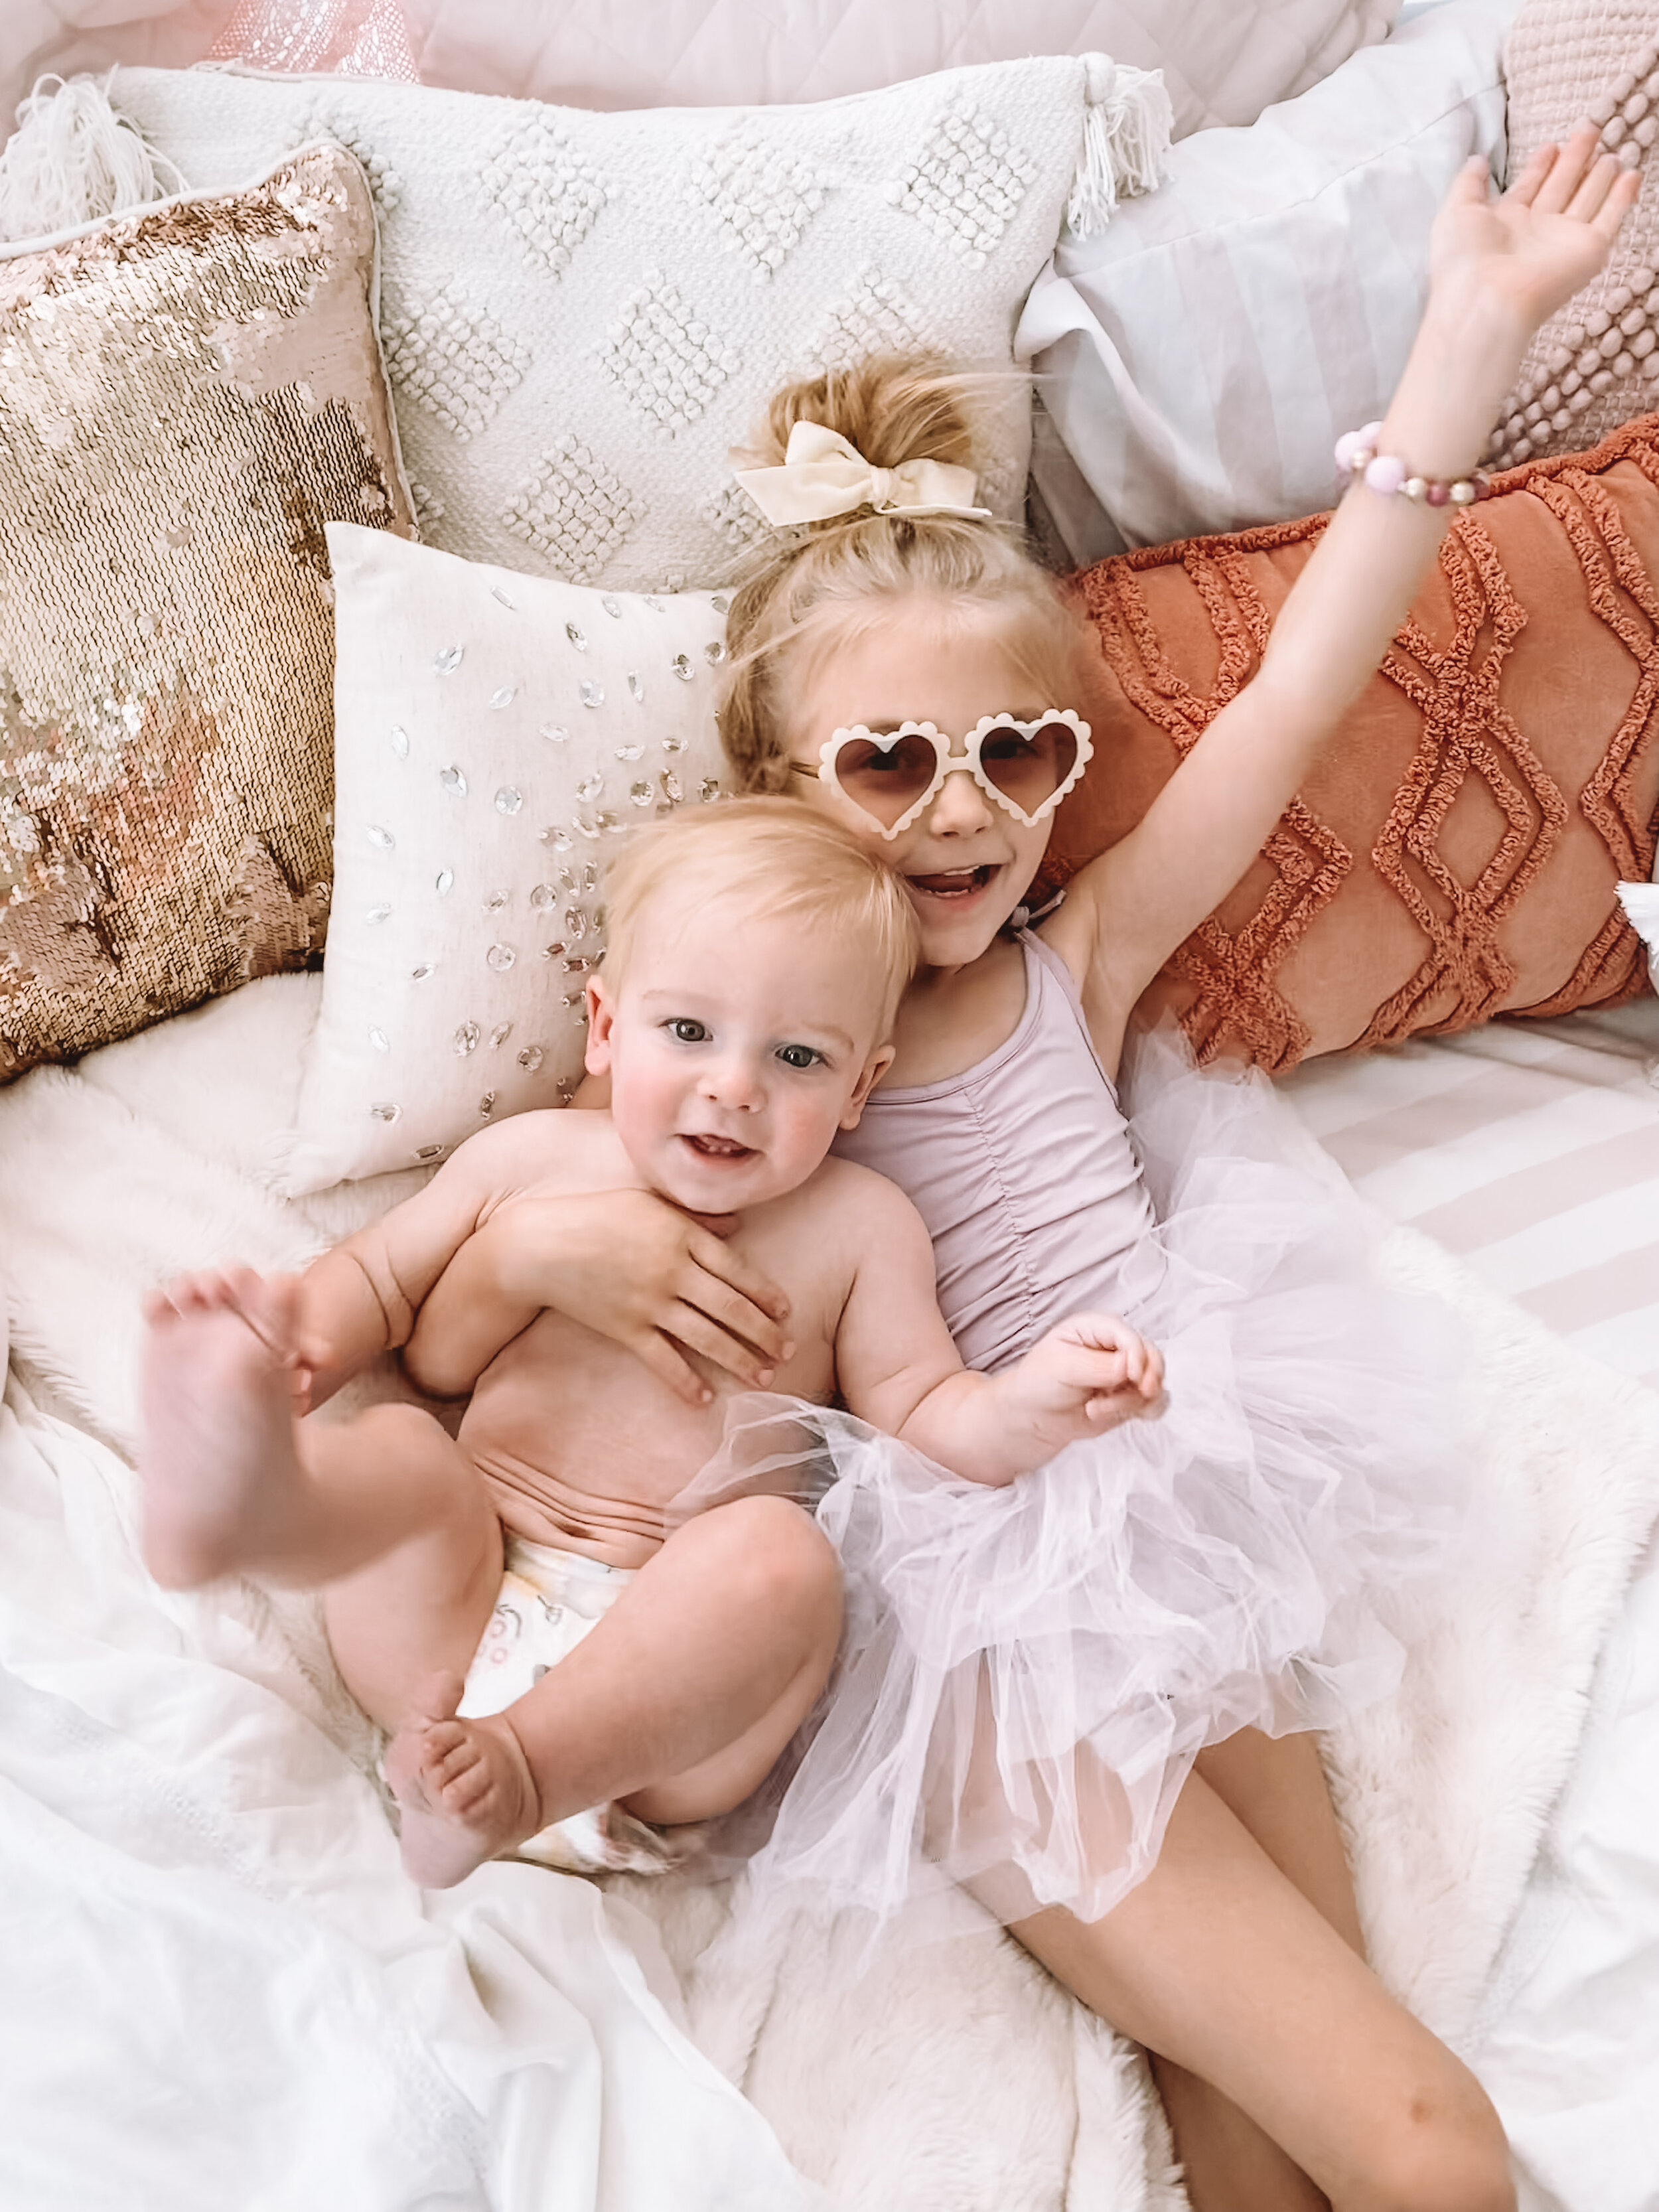 Girly Kids Room Ideas - The Overwhelmed Mommy